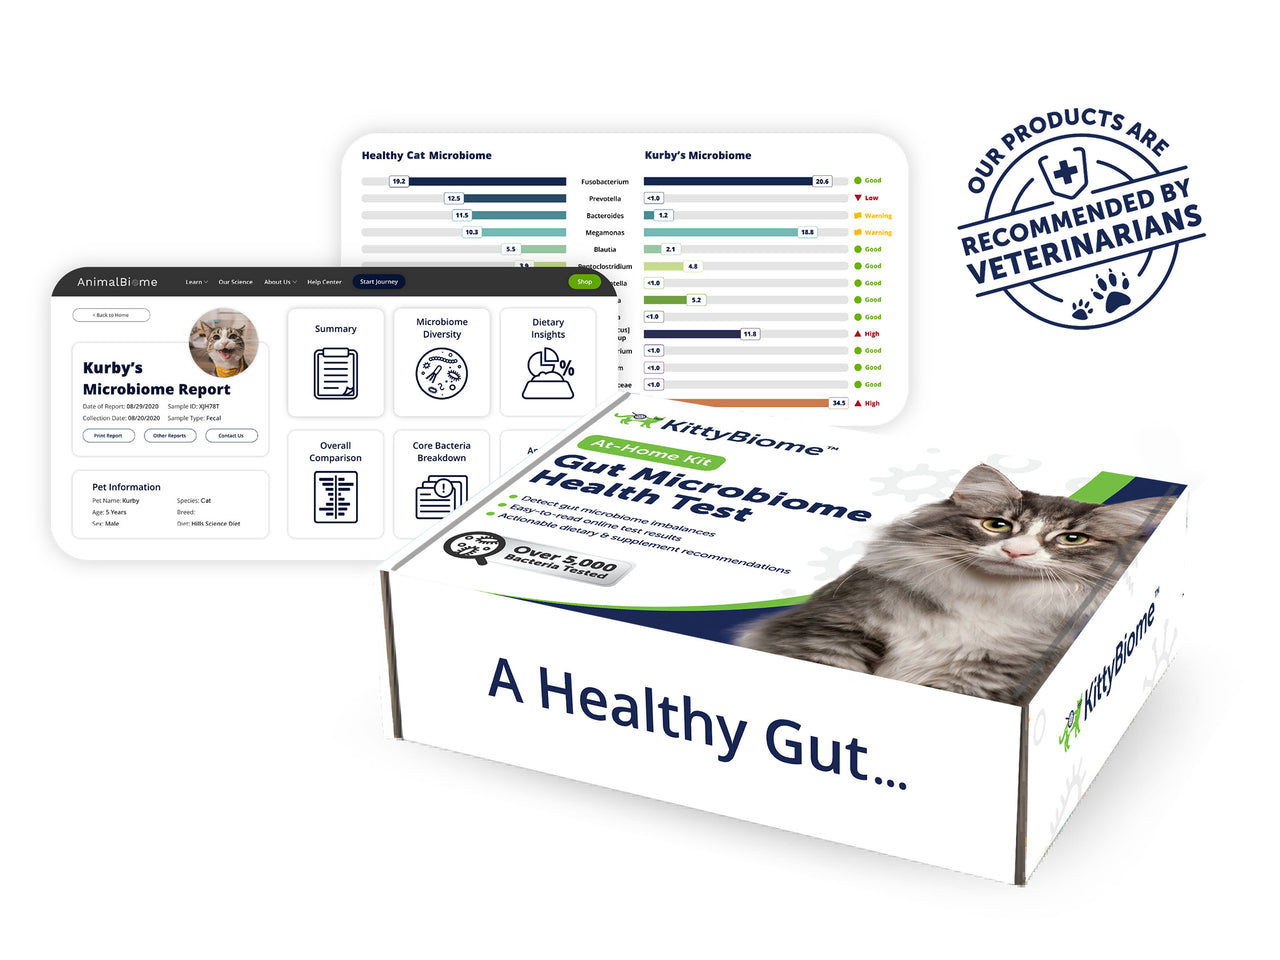 KittyBiome™ Gut Health Test